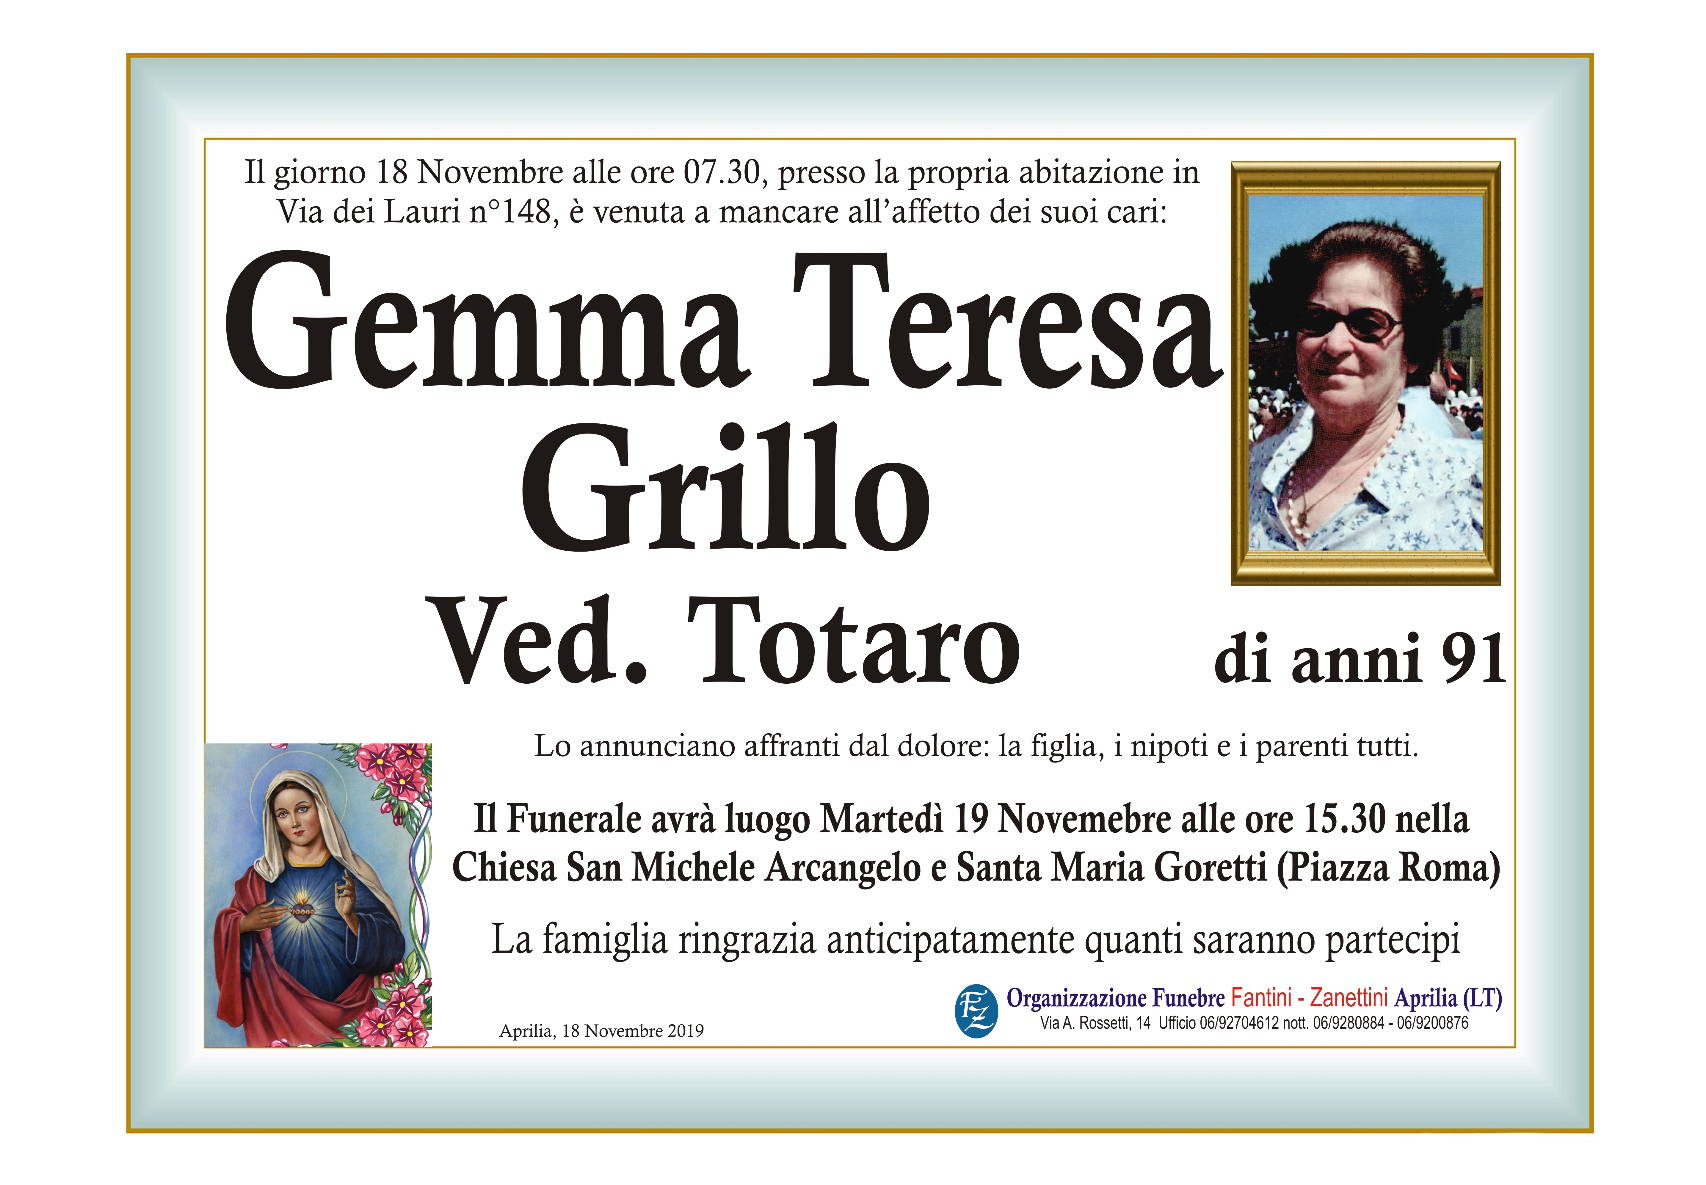 Gemma Teresa Grillo